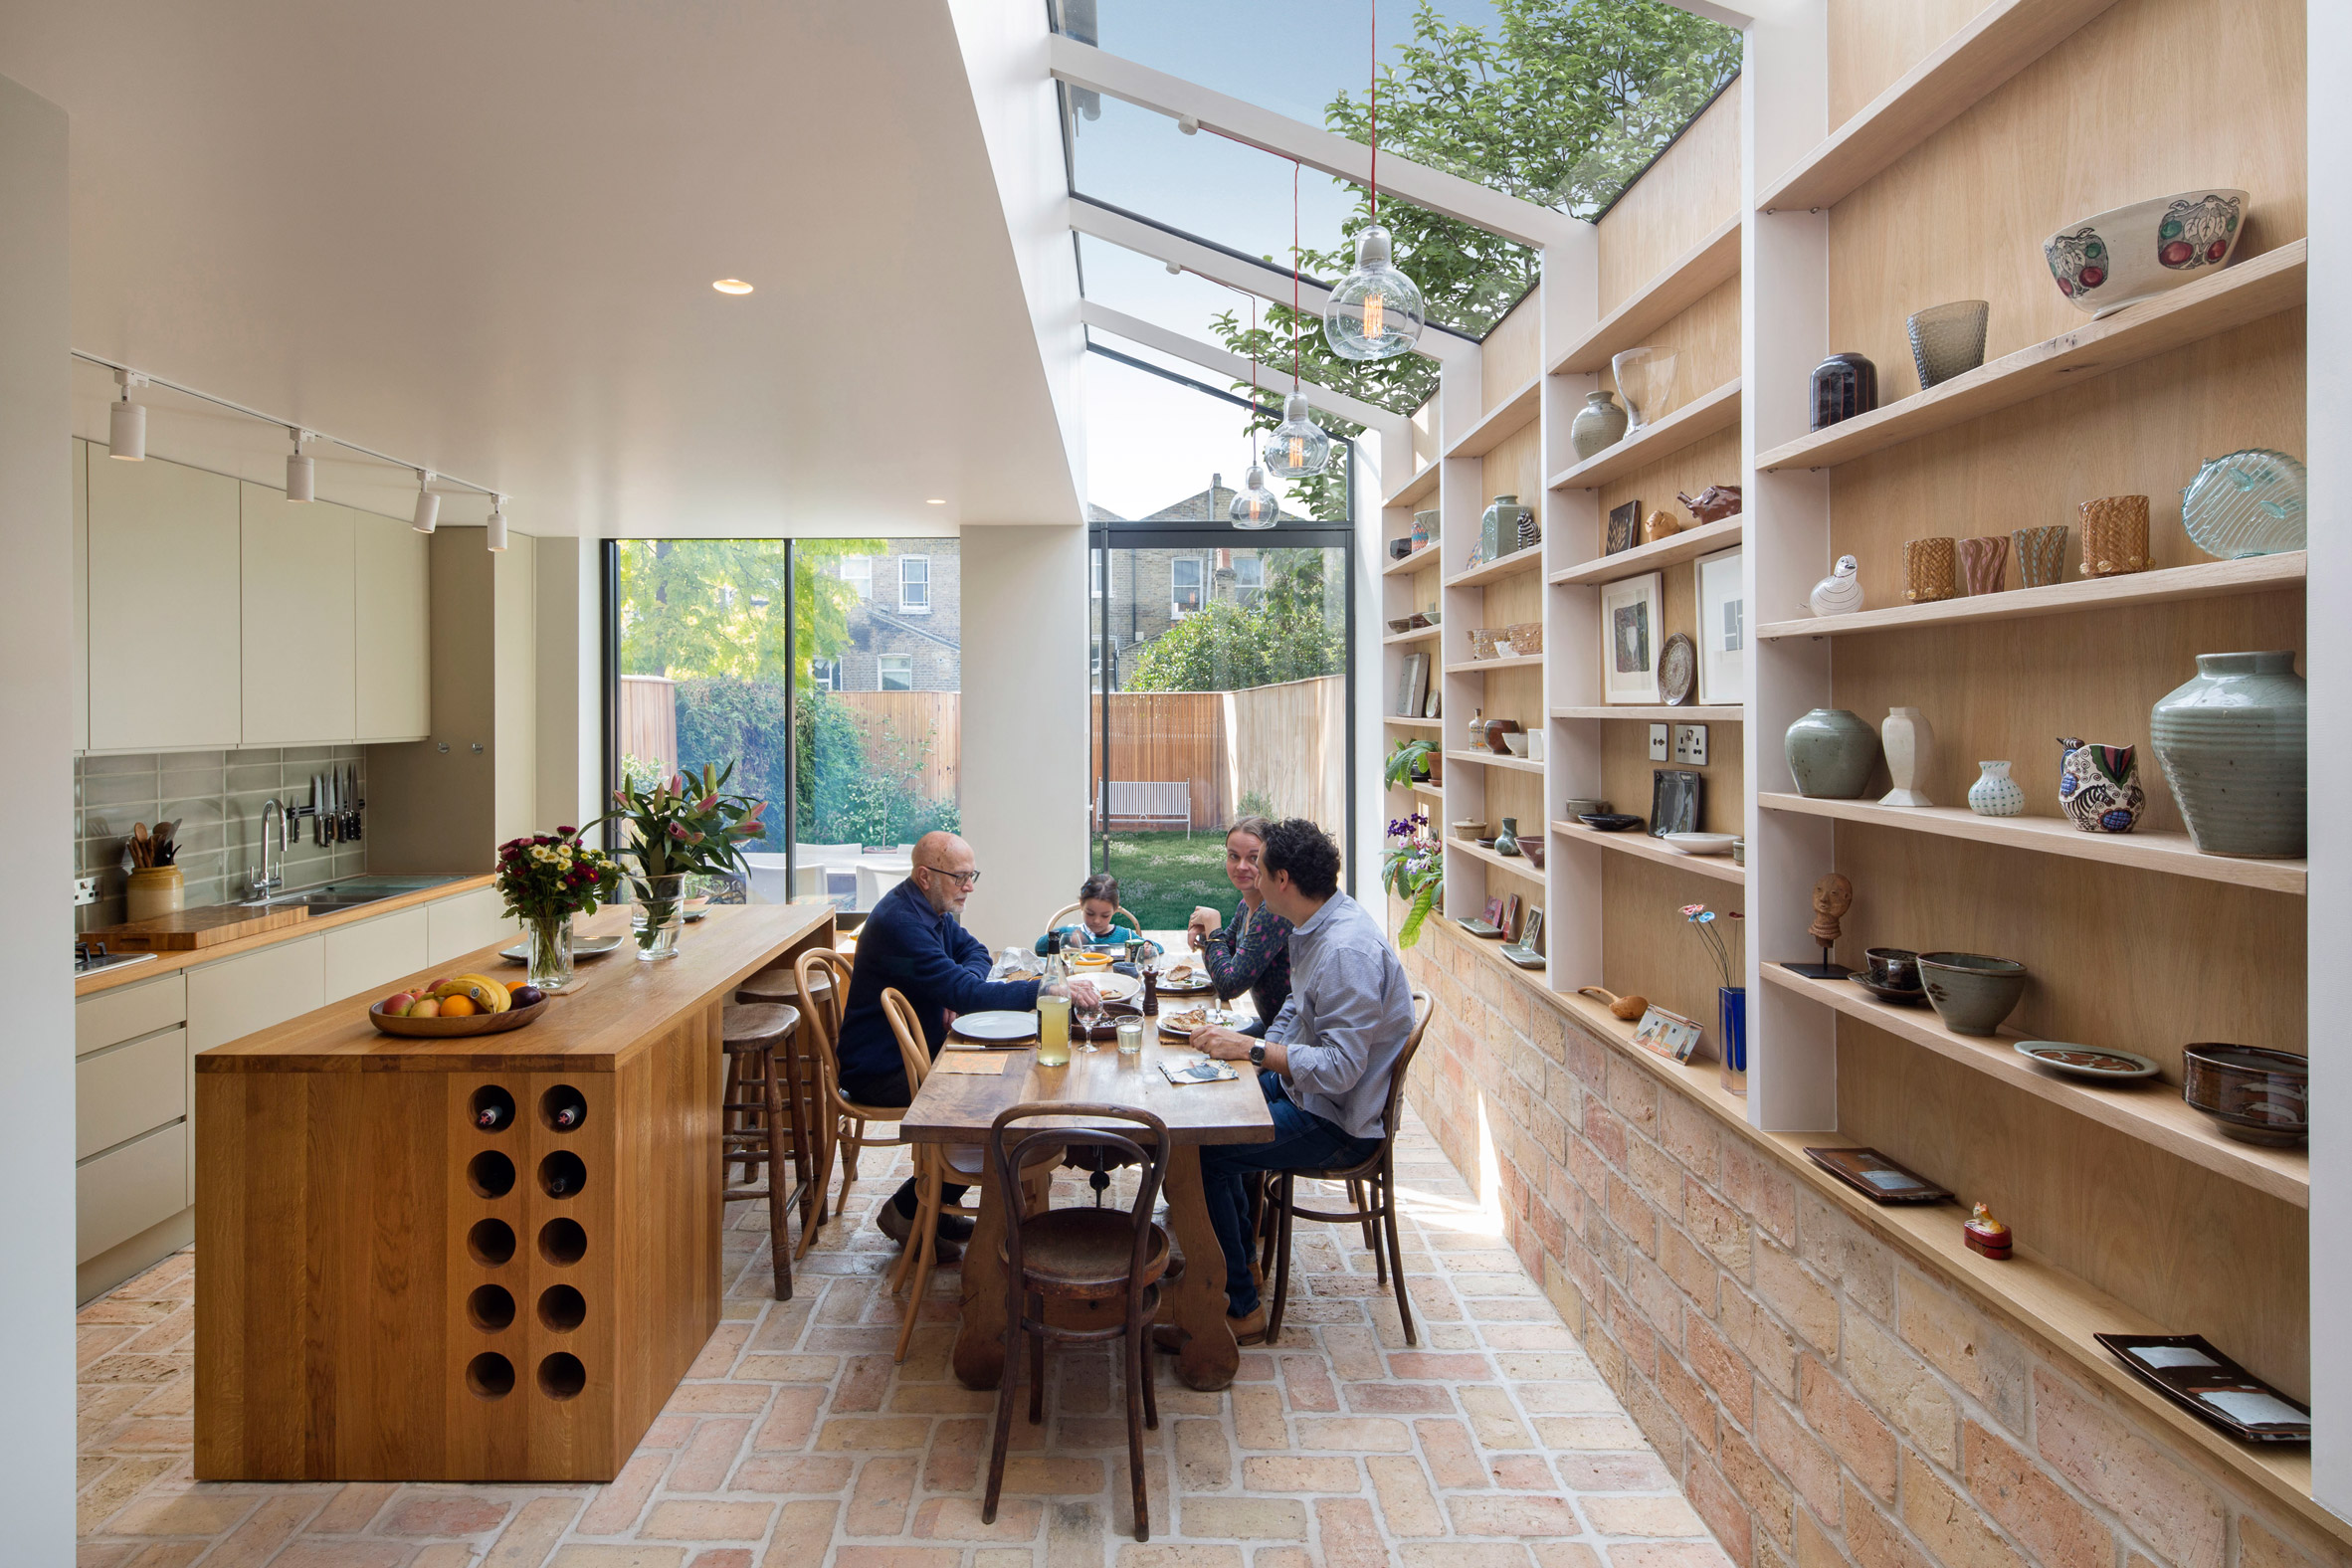 Kitchen island in Gallery House Stoke Newington by Neil Dusheiko Architects